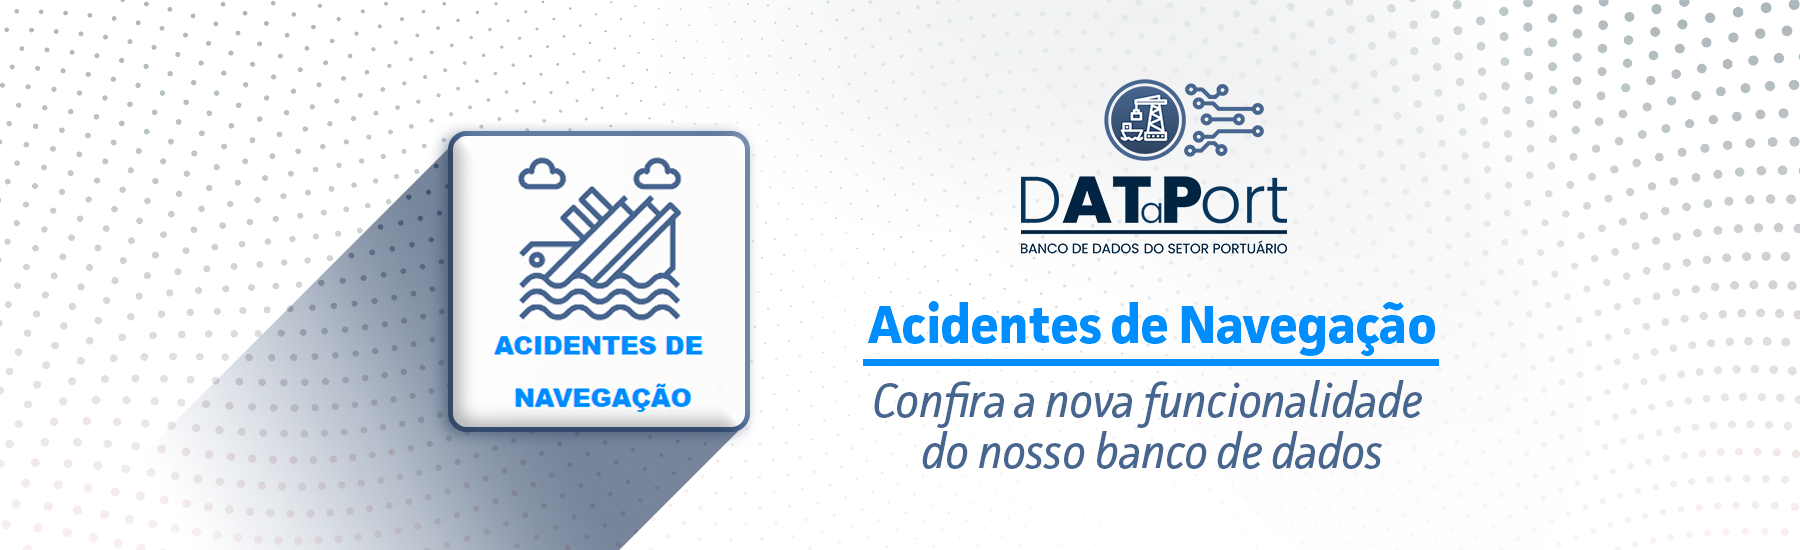 dataport_acidentes